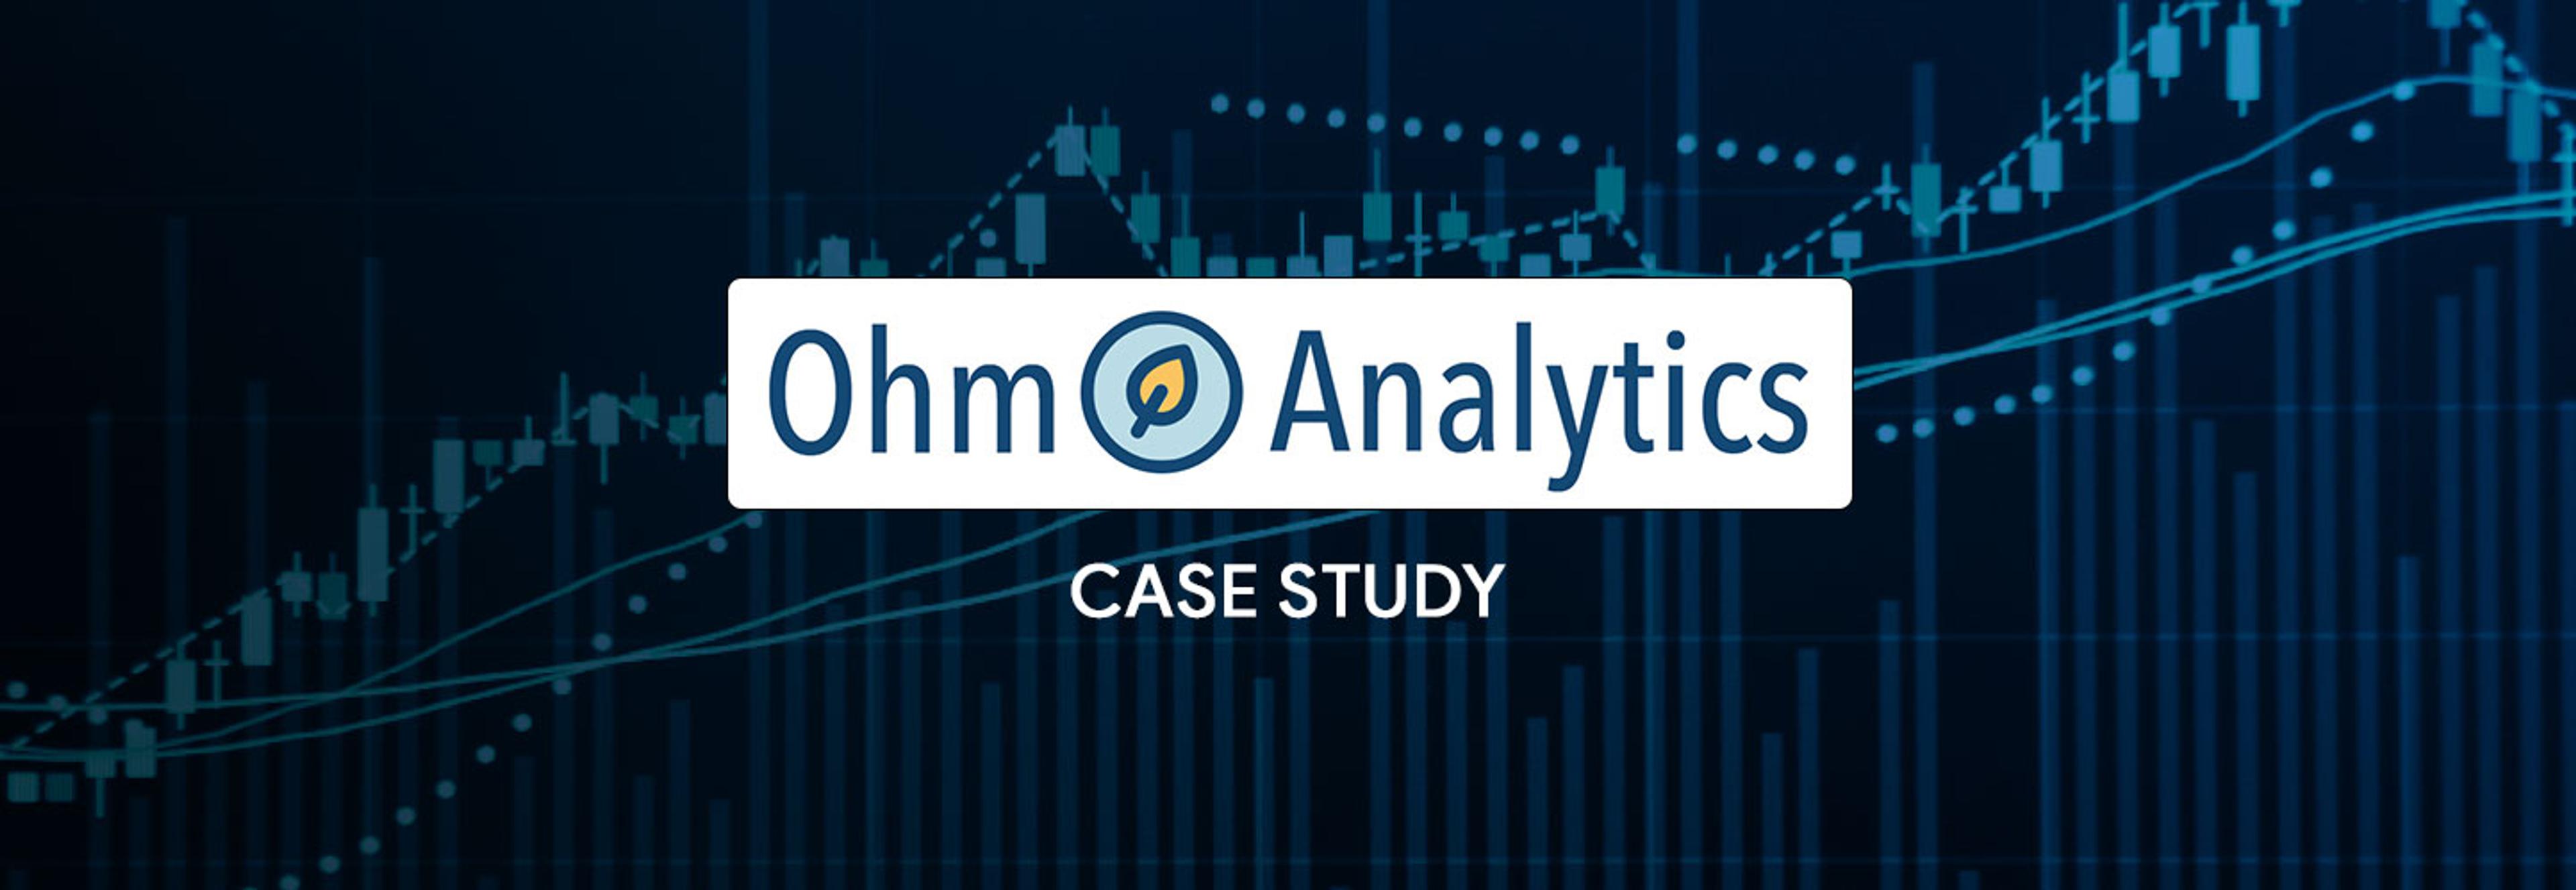 Ohm Analytics - Enerflo Case Study.